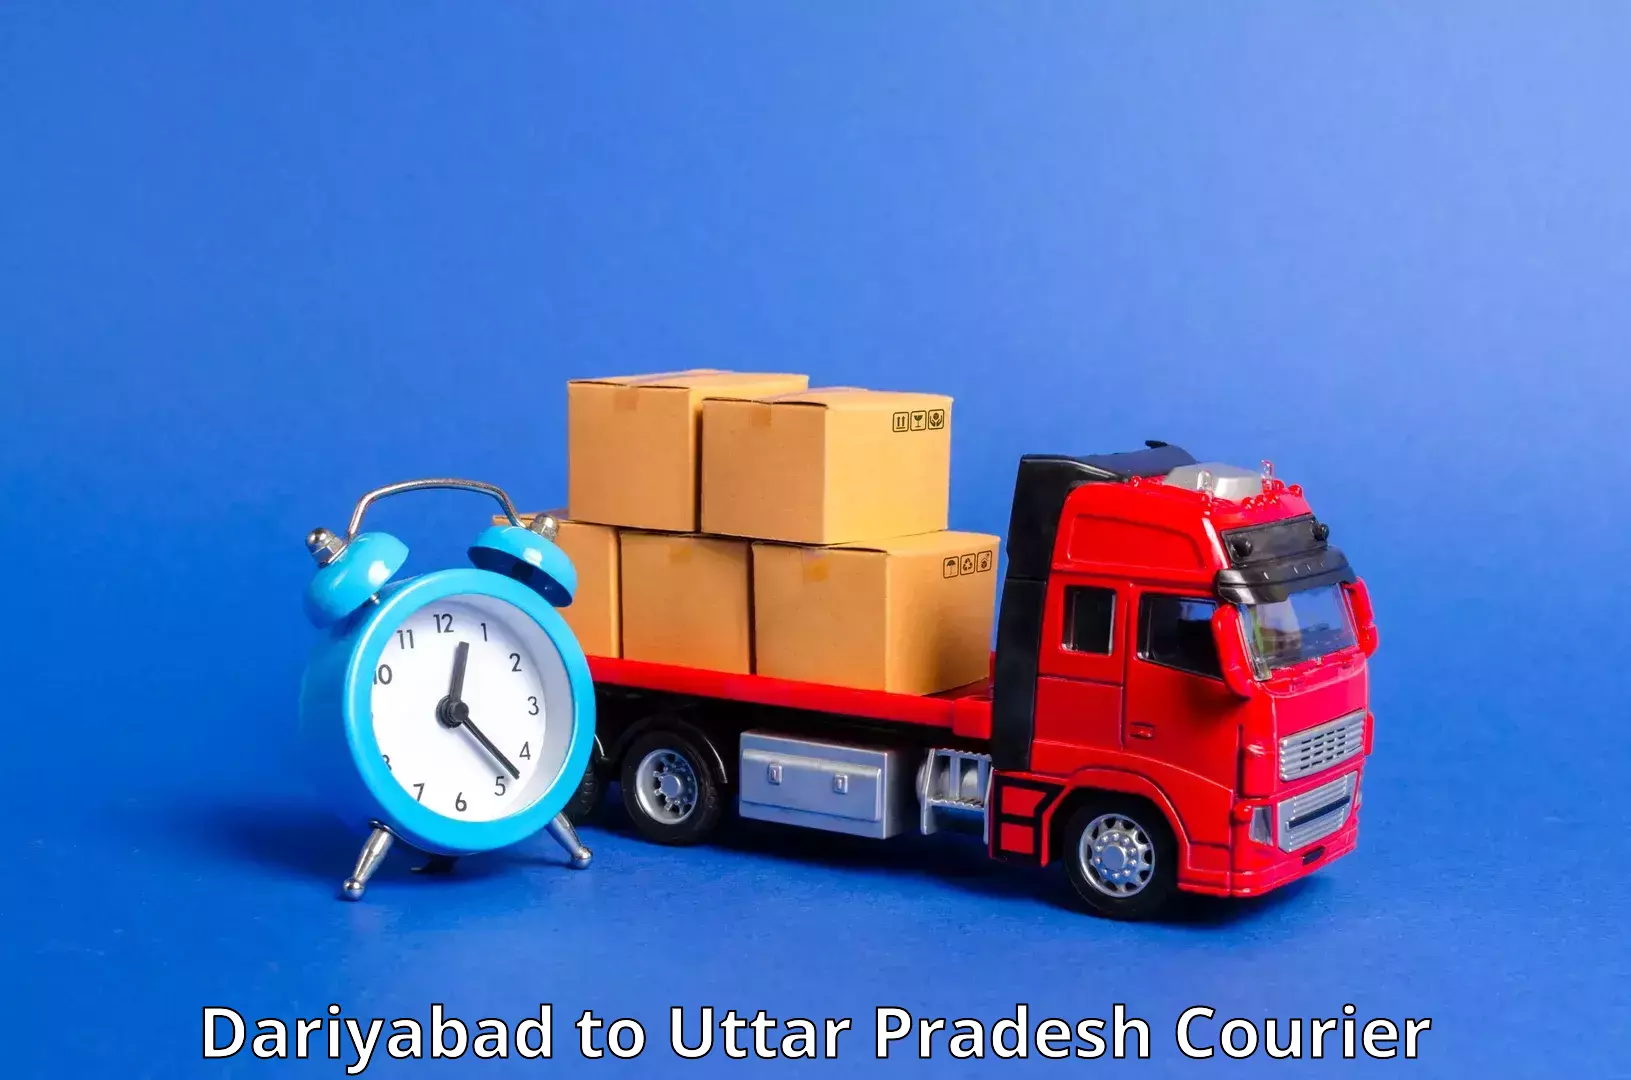 Comprehensive parcel tracking Dariyabad to Ambedkar Nagar